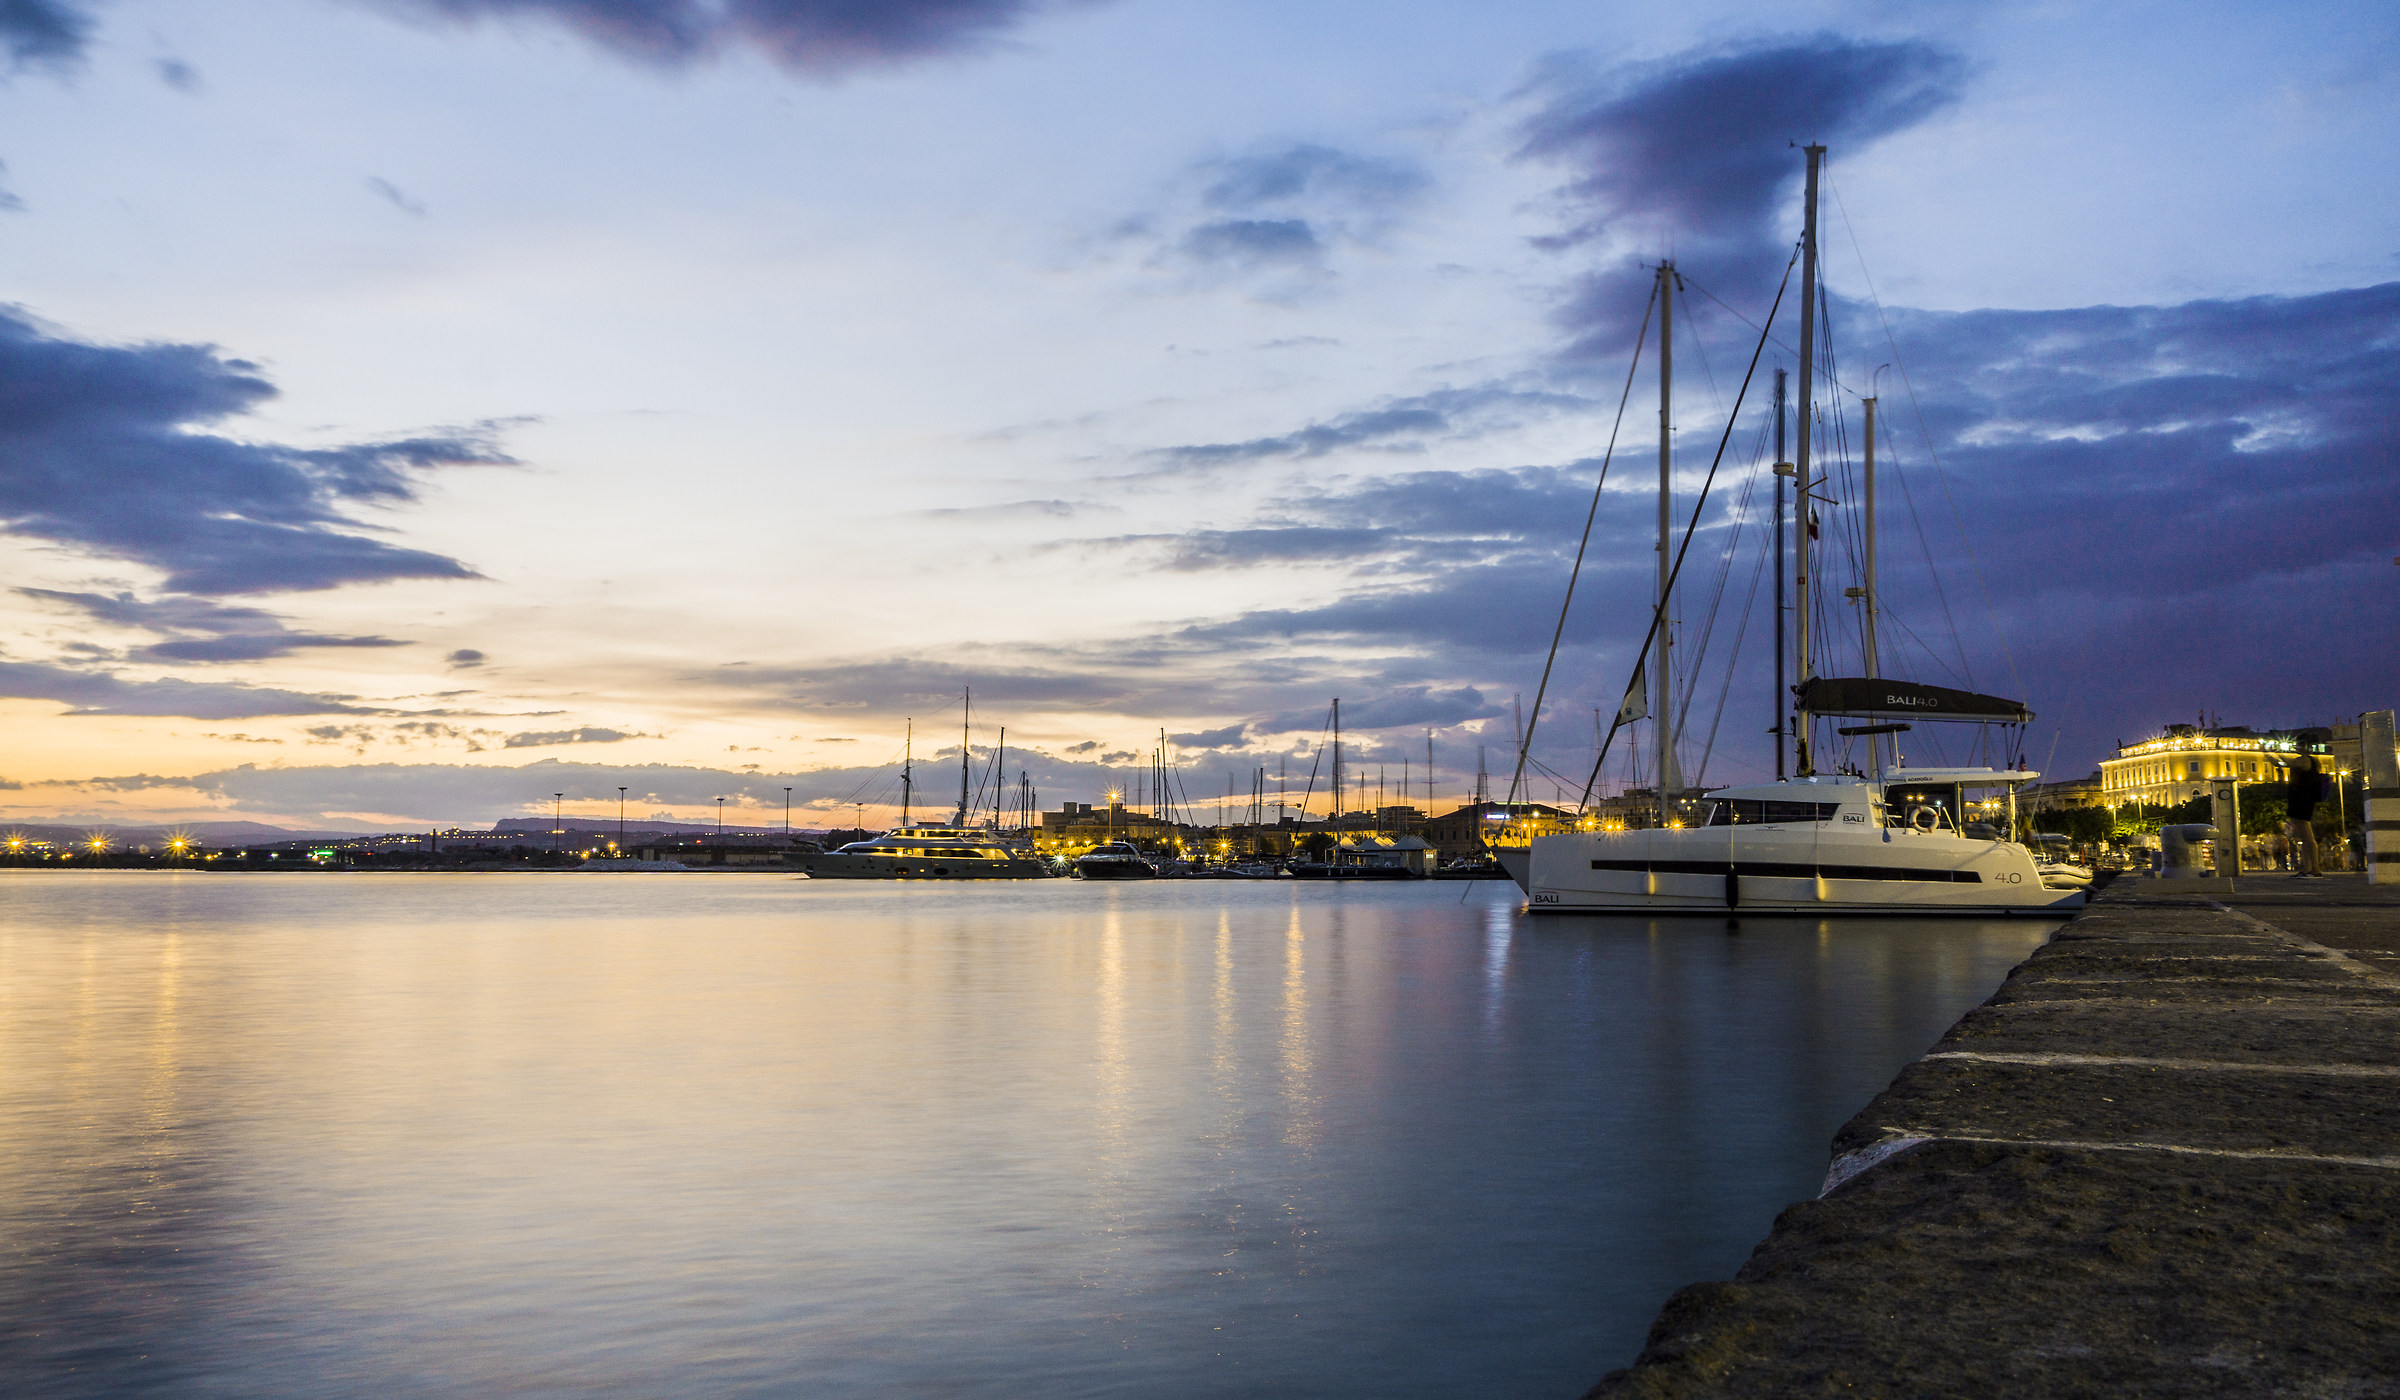 Sunset at the port of Ortigia...